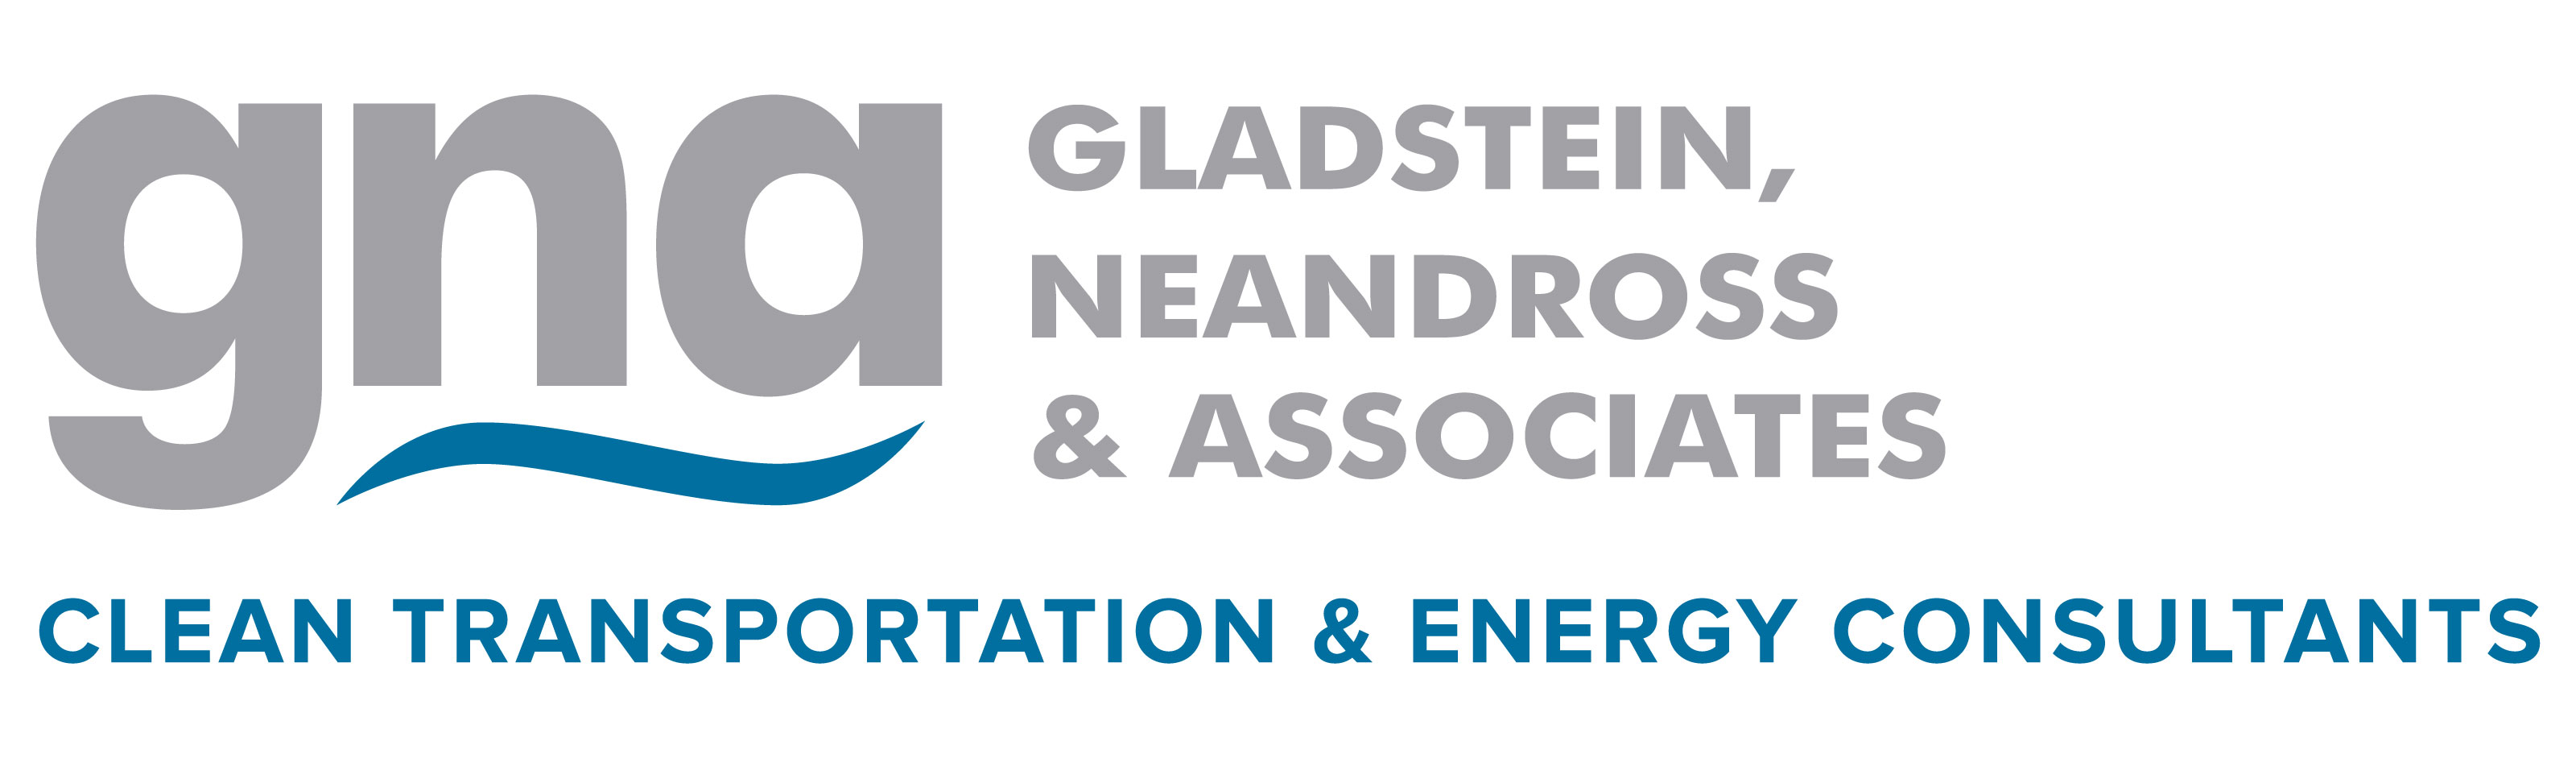 Gladstein Neandross & Associates